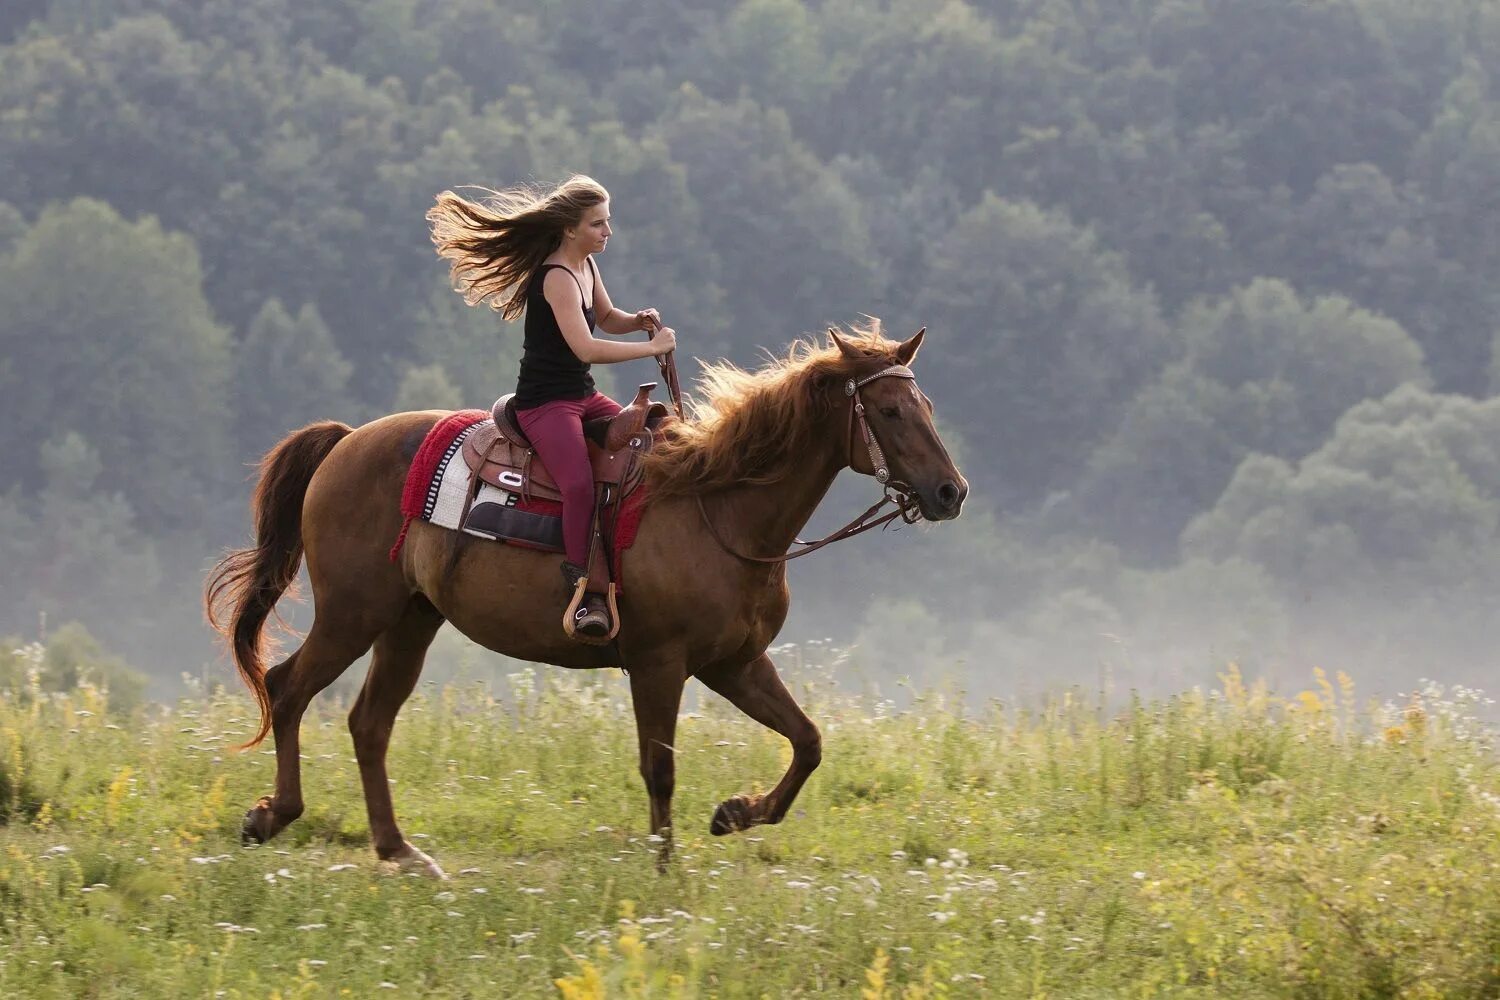 Прогулка на лошадях. Девушка едет на коне. Верхом на коне. Лошадь скачет.